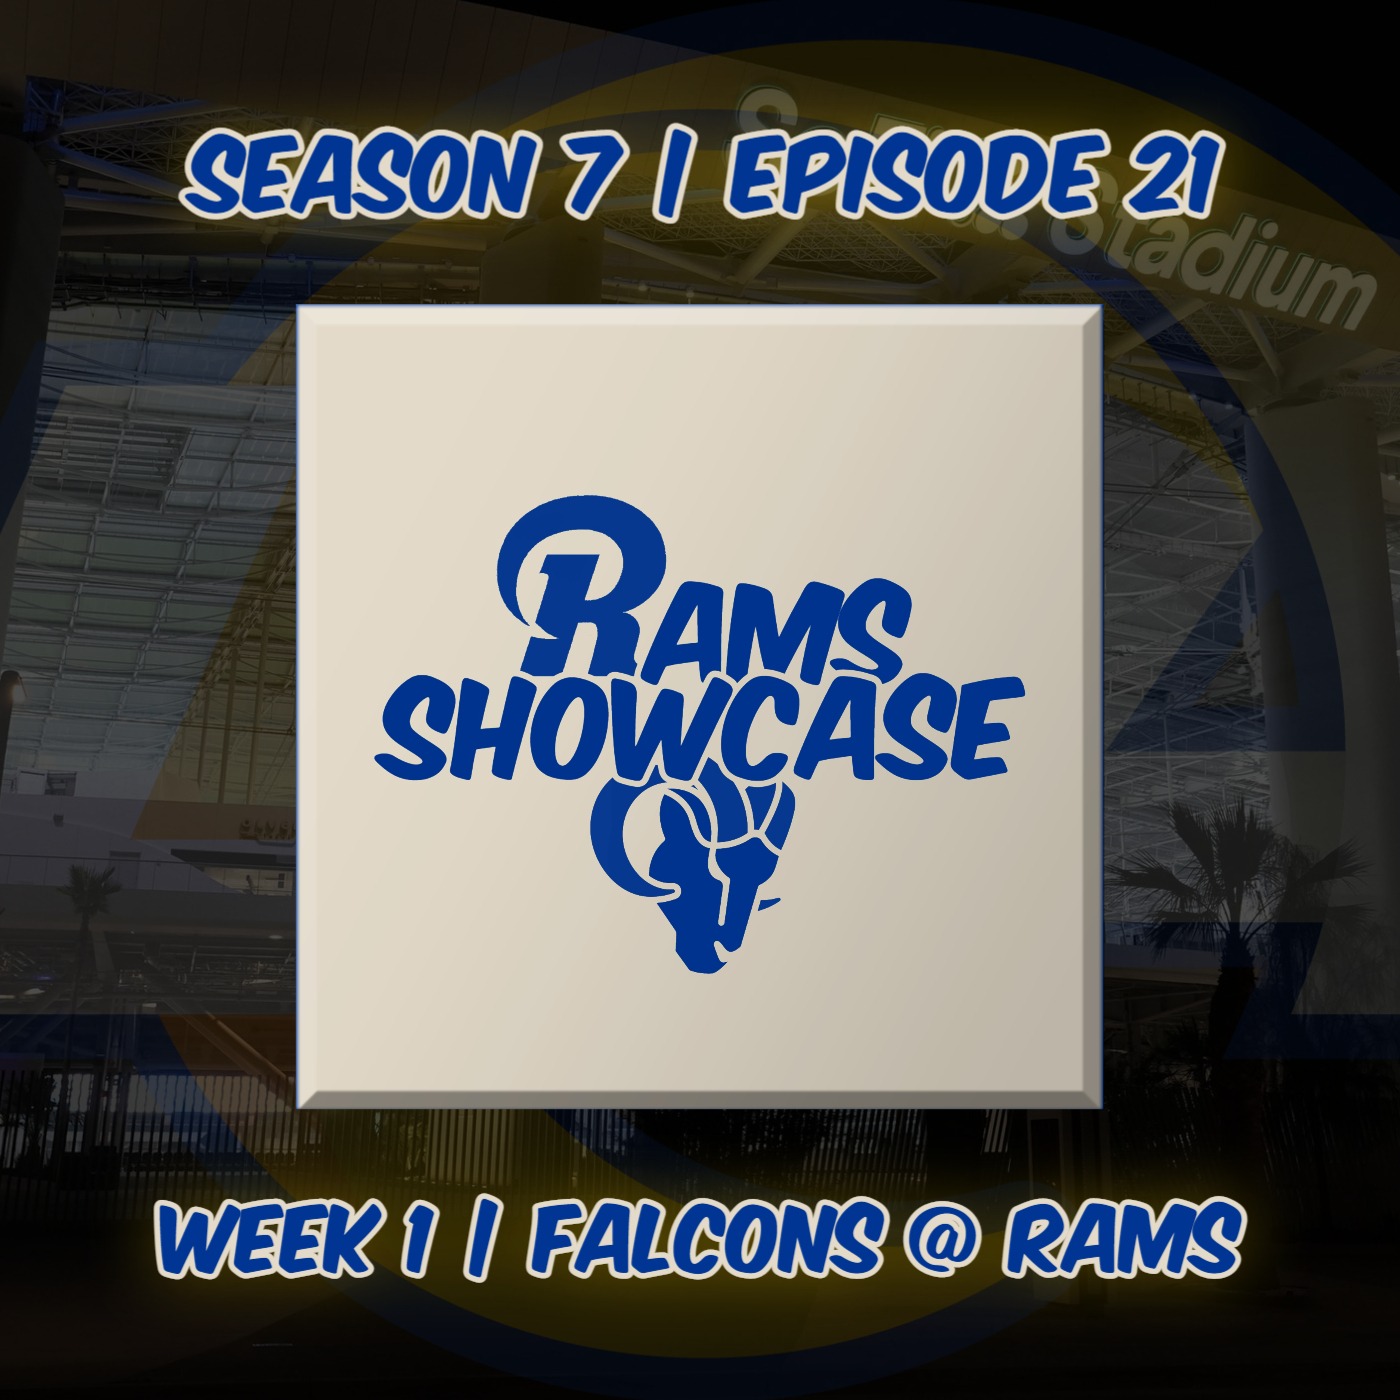 Rams Showcase | Week 2 - Falcons @ Rams | FULL PODCAST